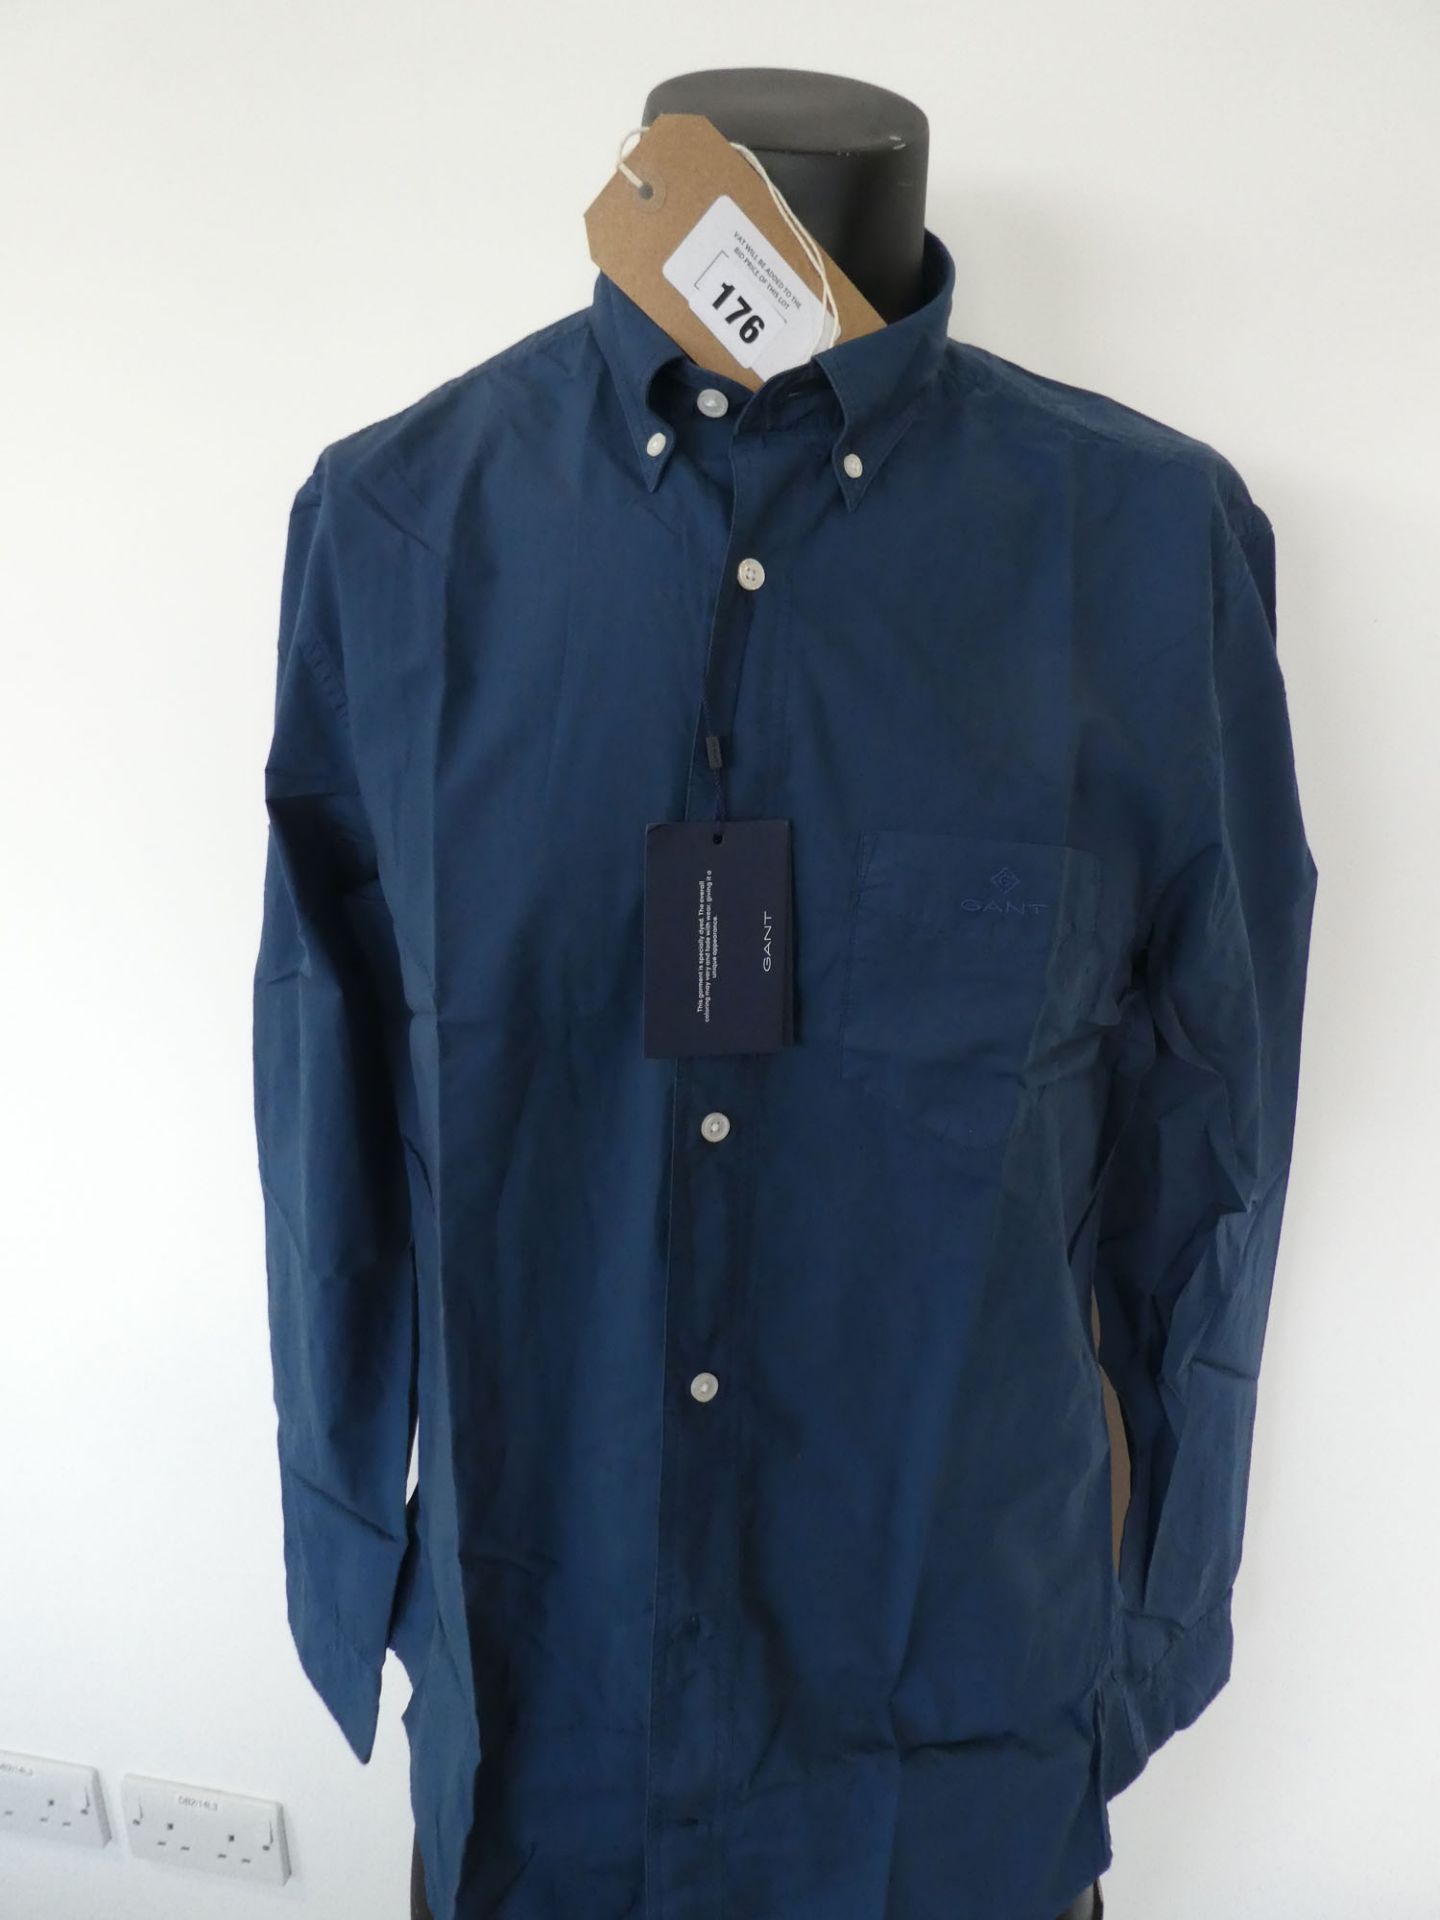 Gant sunfaded broadcloth slim shirt in insignia blue size L